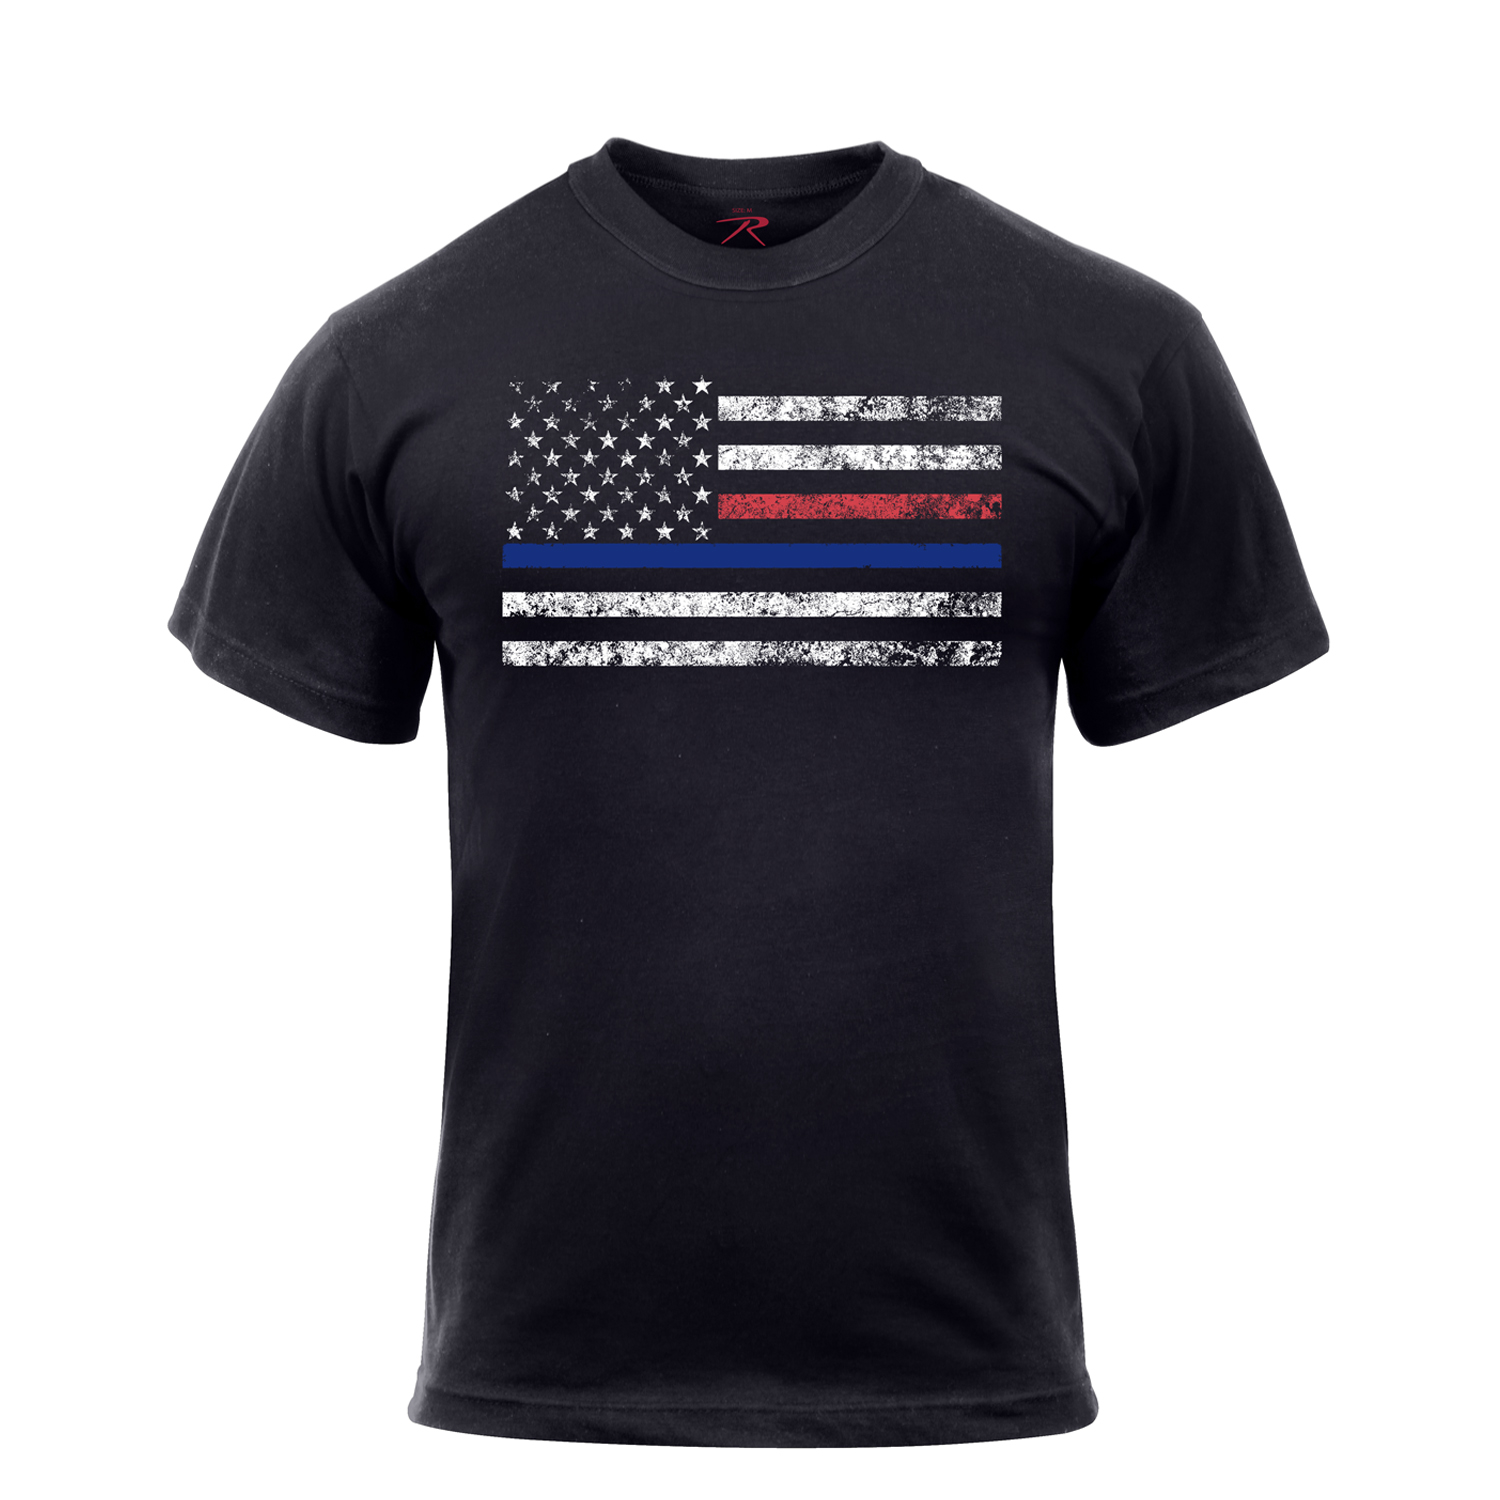 Rothco Thin Blue Line & Thin Red Line T-shirt with U.S. Flag